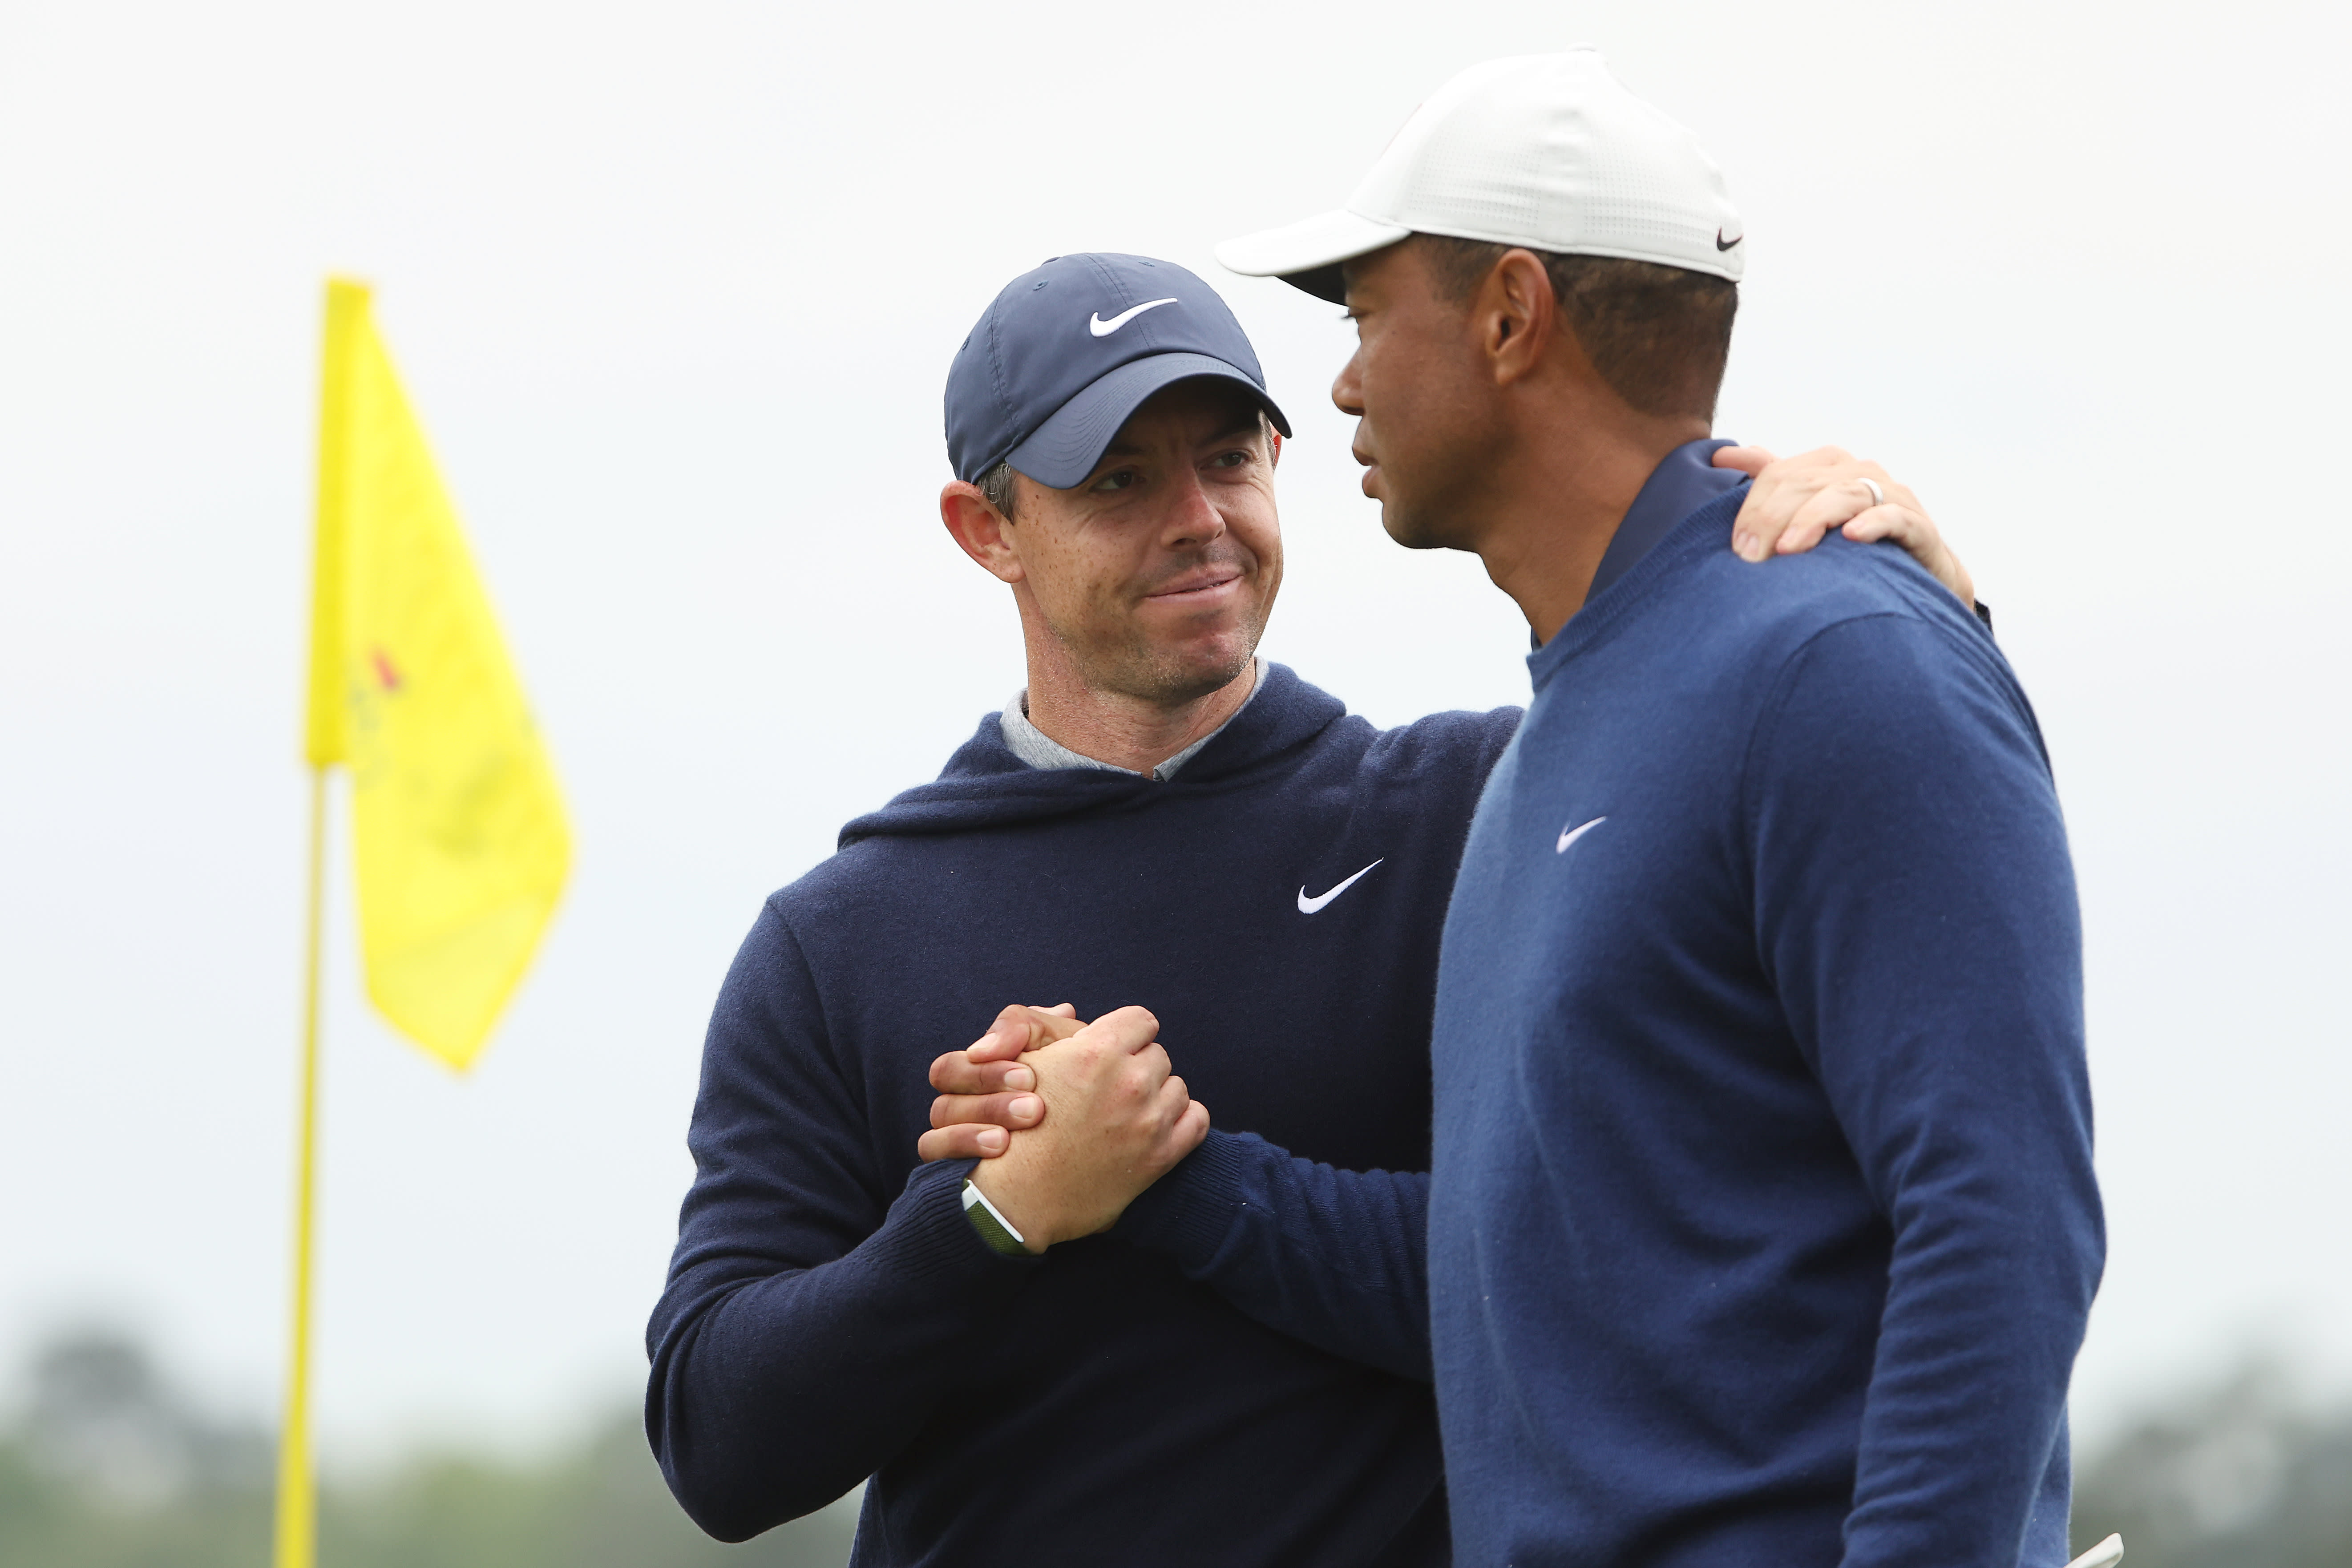 La Tiger Woods e Rory McIlroy TGL Golf League sarà trasmessa su ESPN